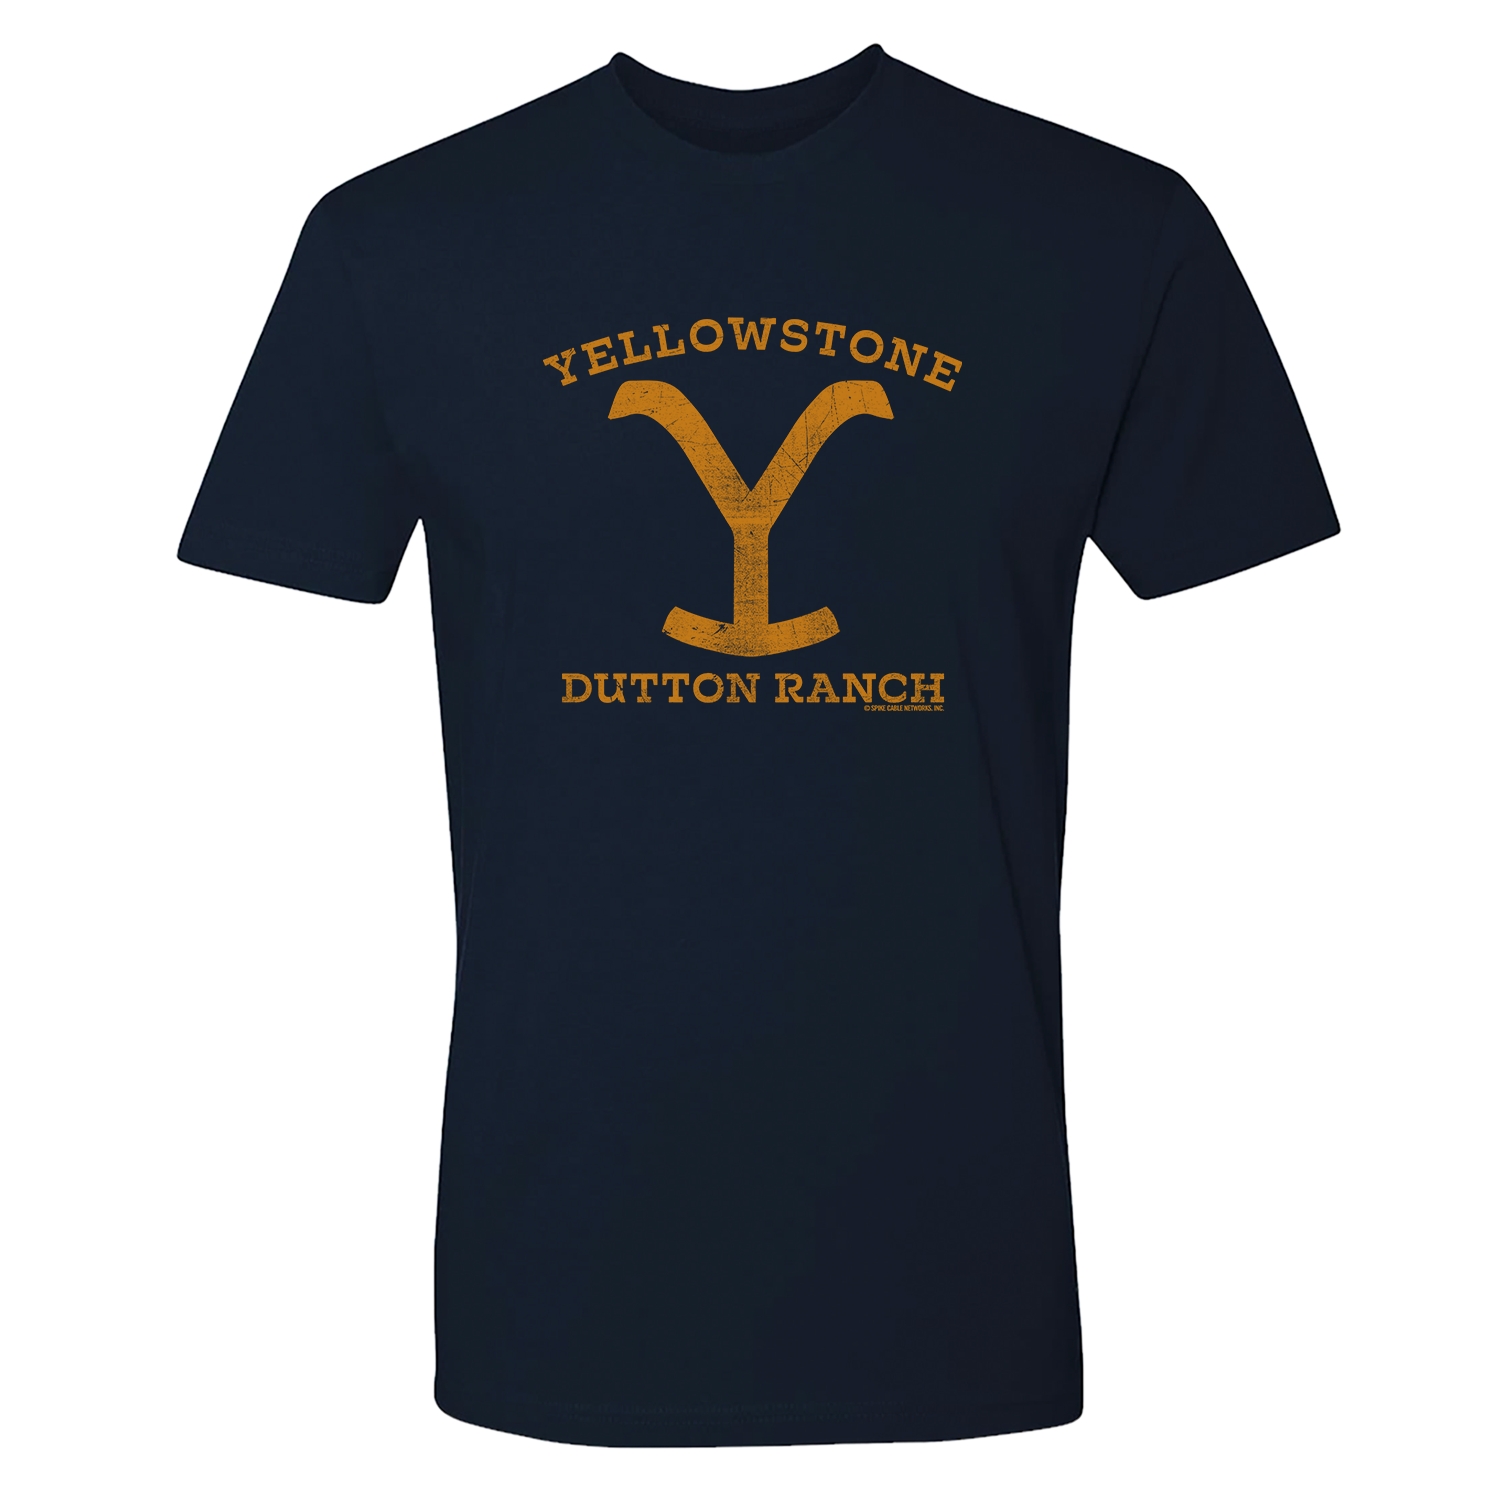 Yellowstone Dutton Ranch Distressed Logo Adult Short Sleeve T-Shirt